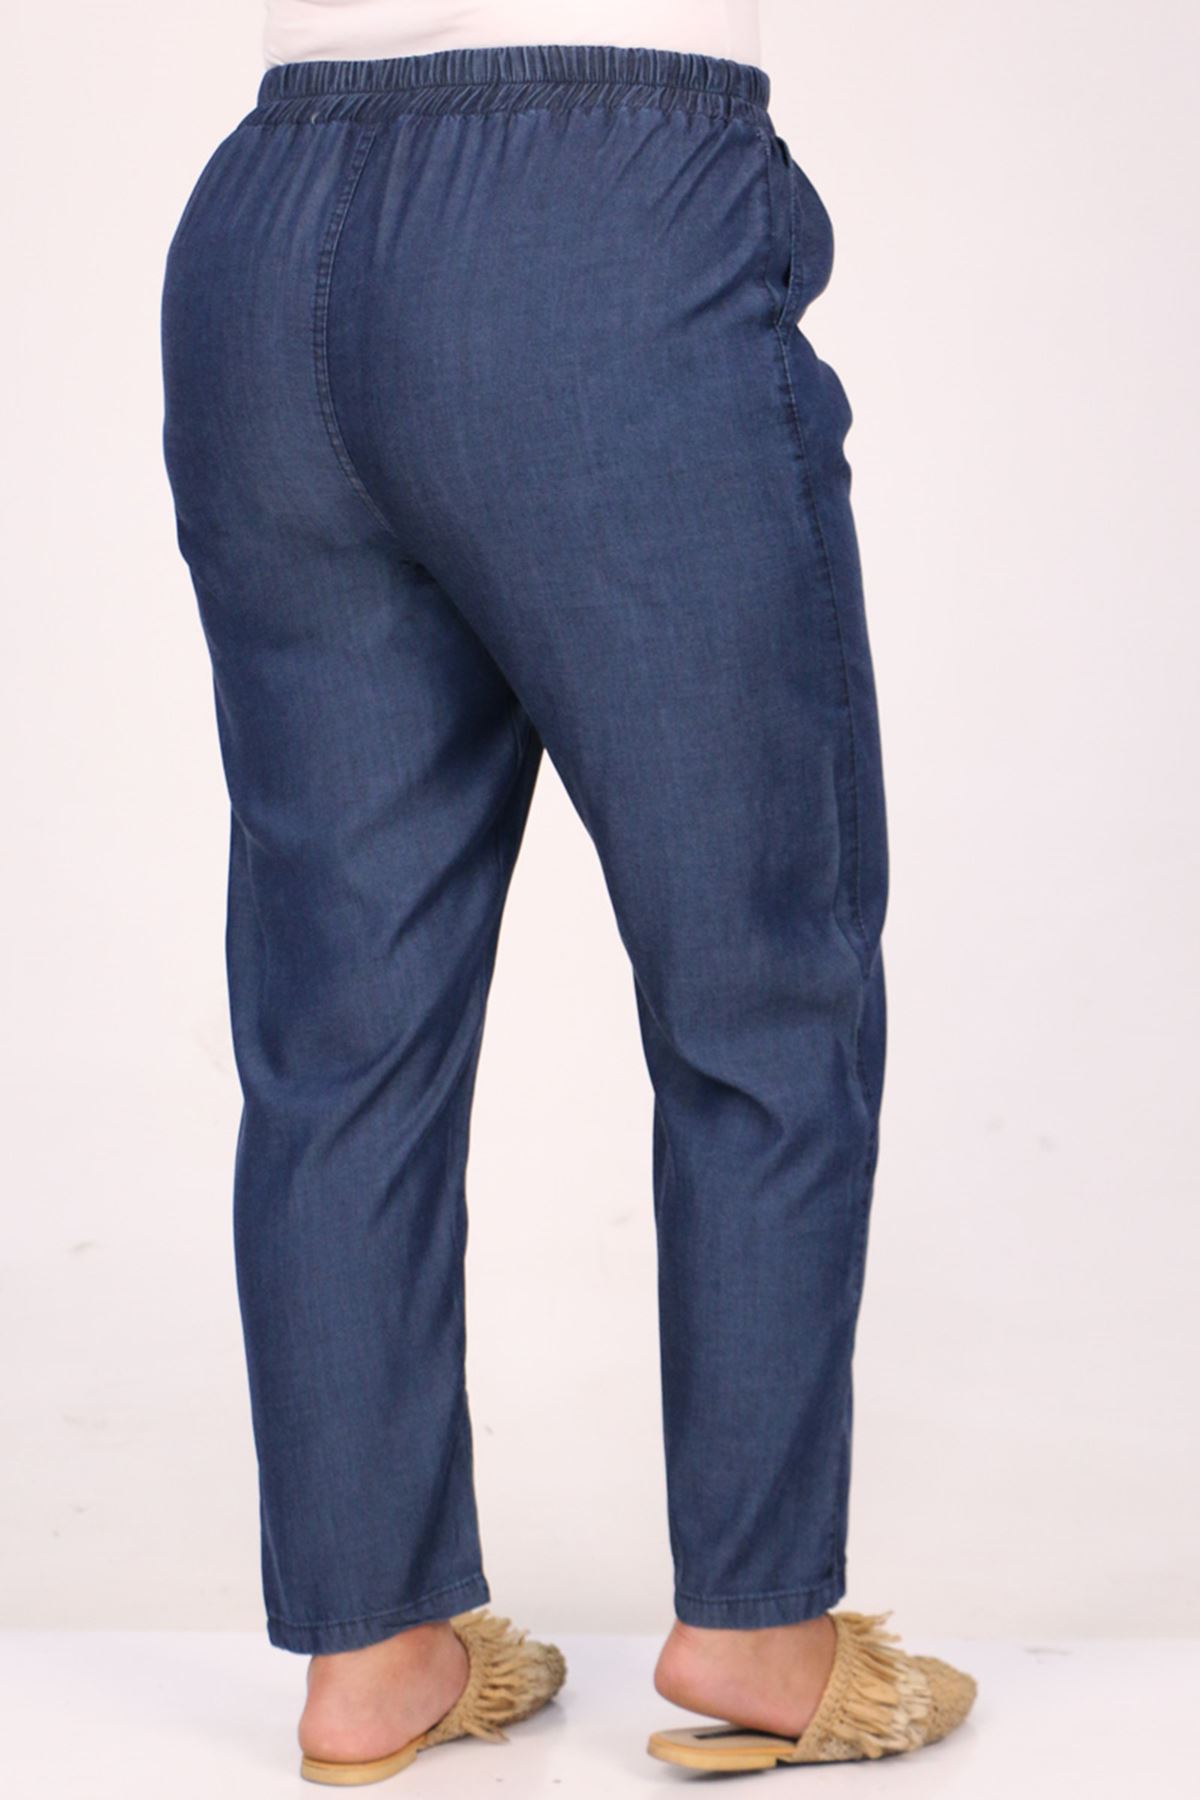 29001-2 Large Size Slim Leg Jeans-Navy Blue